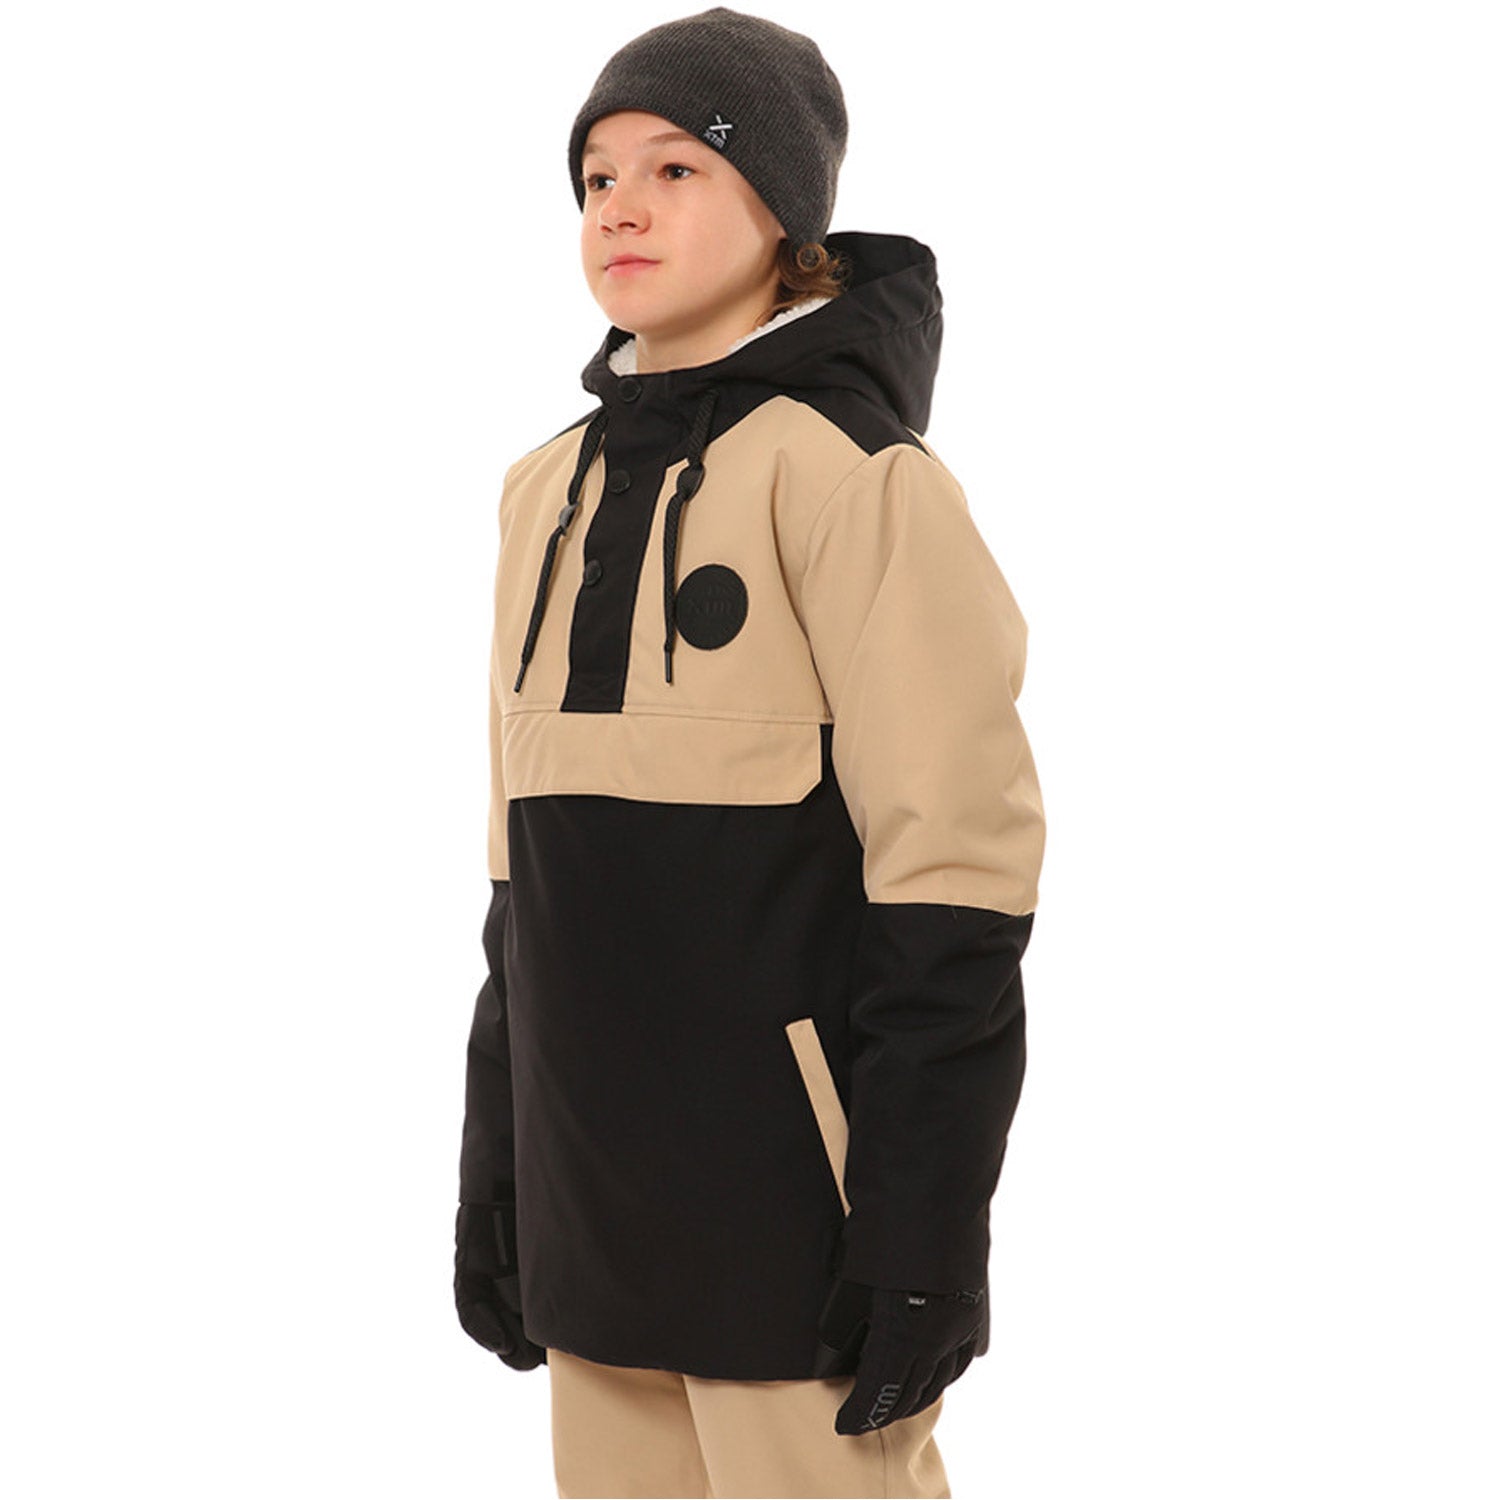 XTM Riley Youth Anorak Snow Jacket Oatmeal